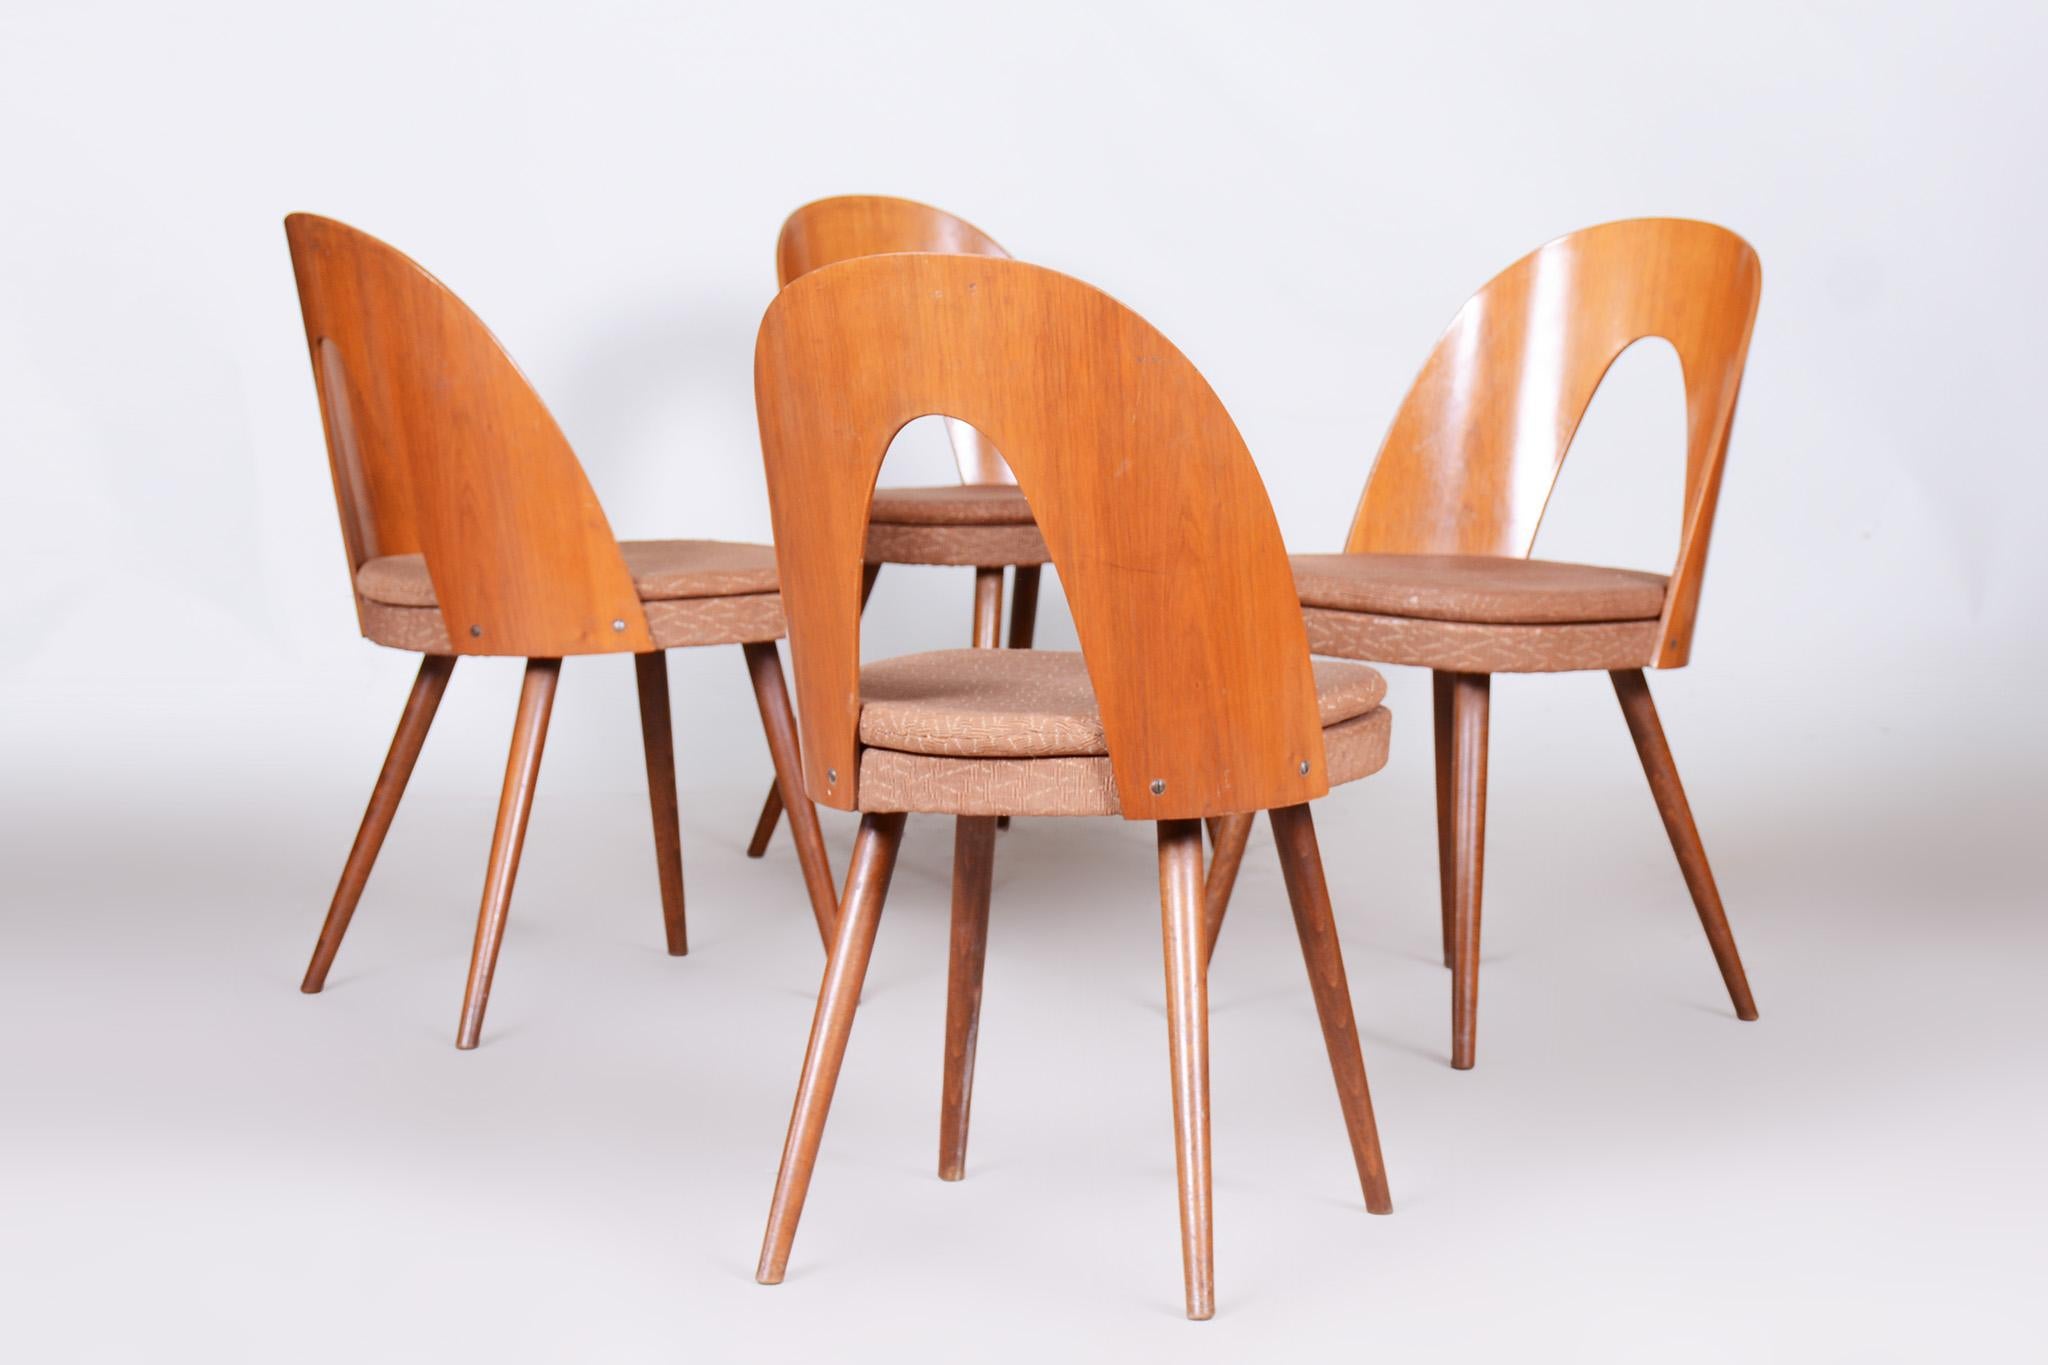 Set of Four Mid-Century Modern Chairs Made in 1950s Czechia by Antonín Šuman For Sale 5